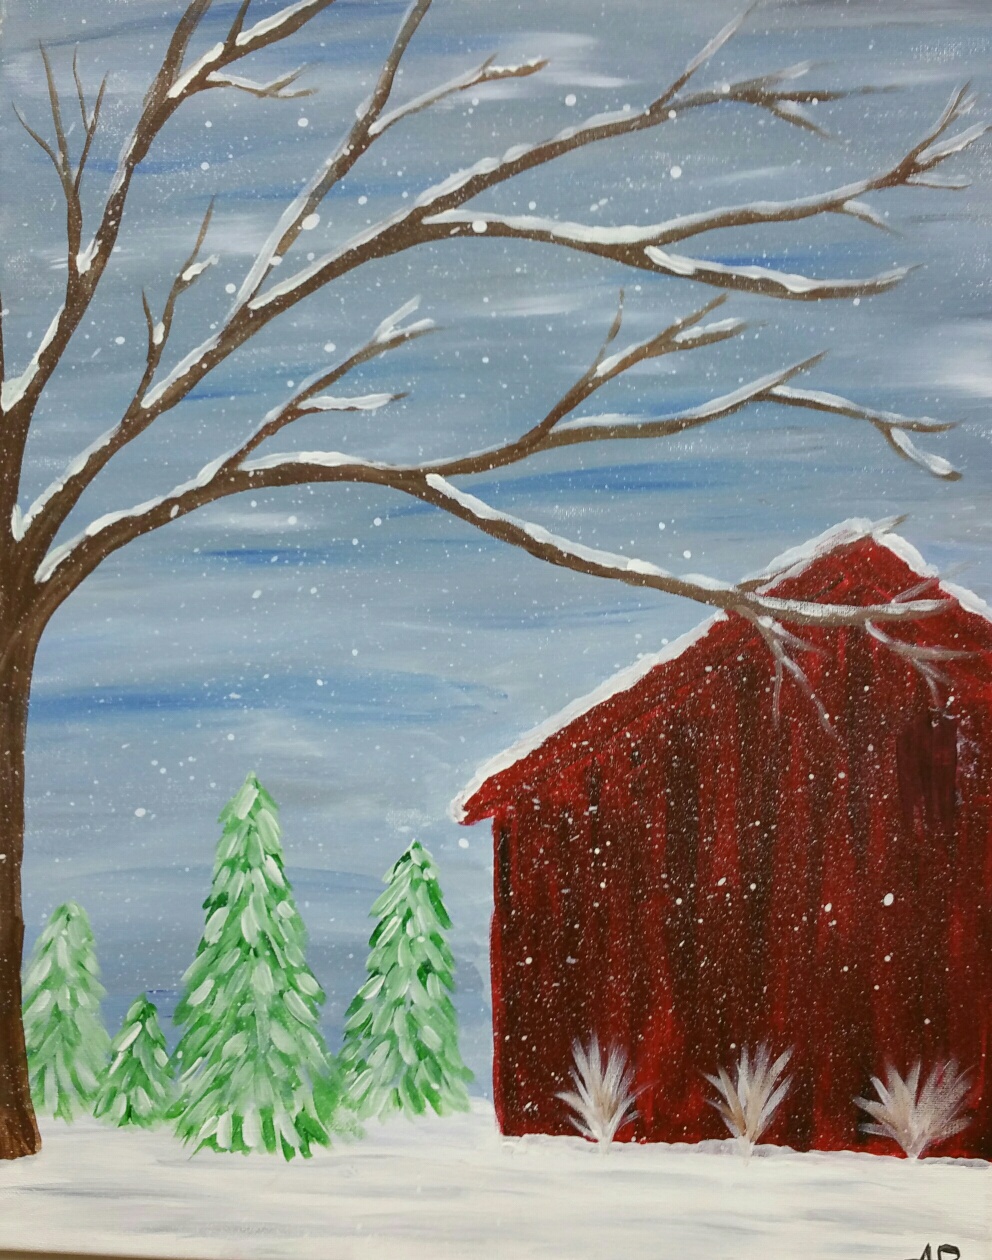 Winter Barn (EC Studio)